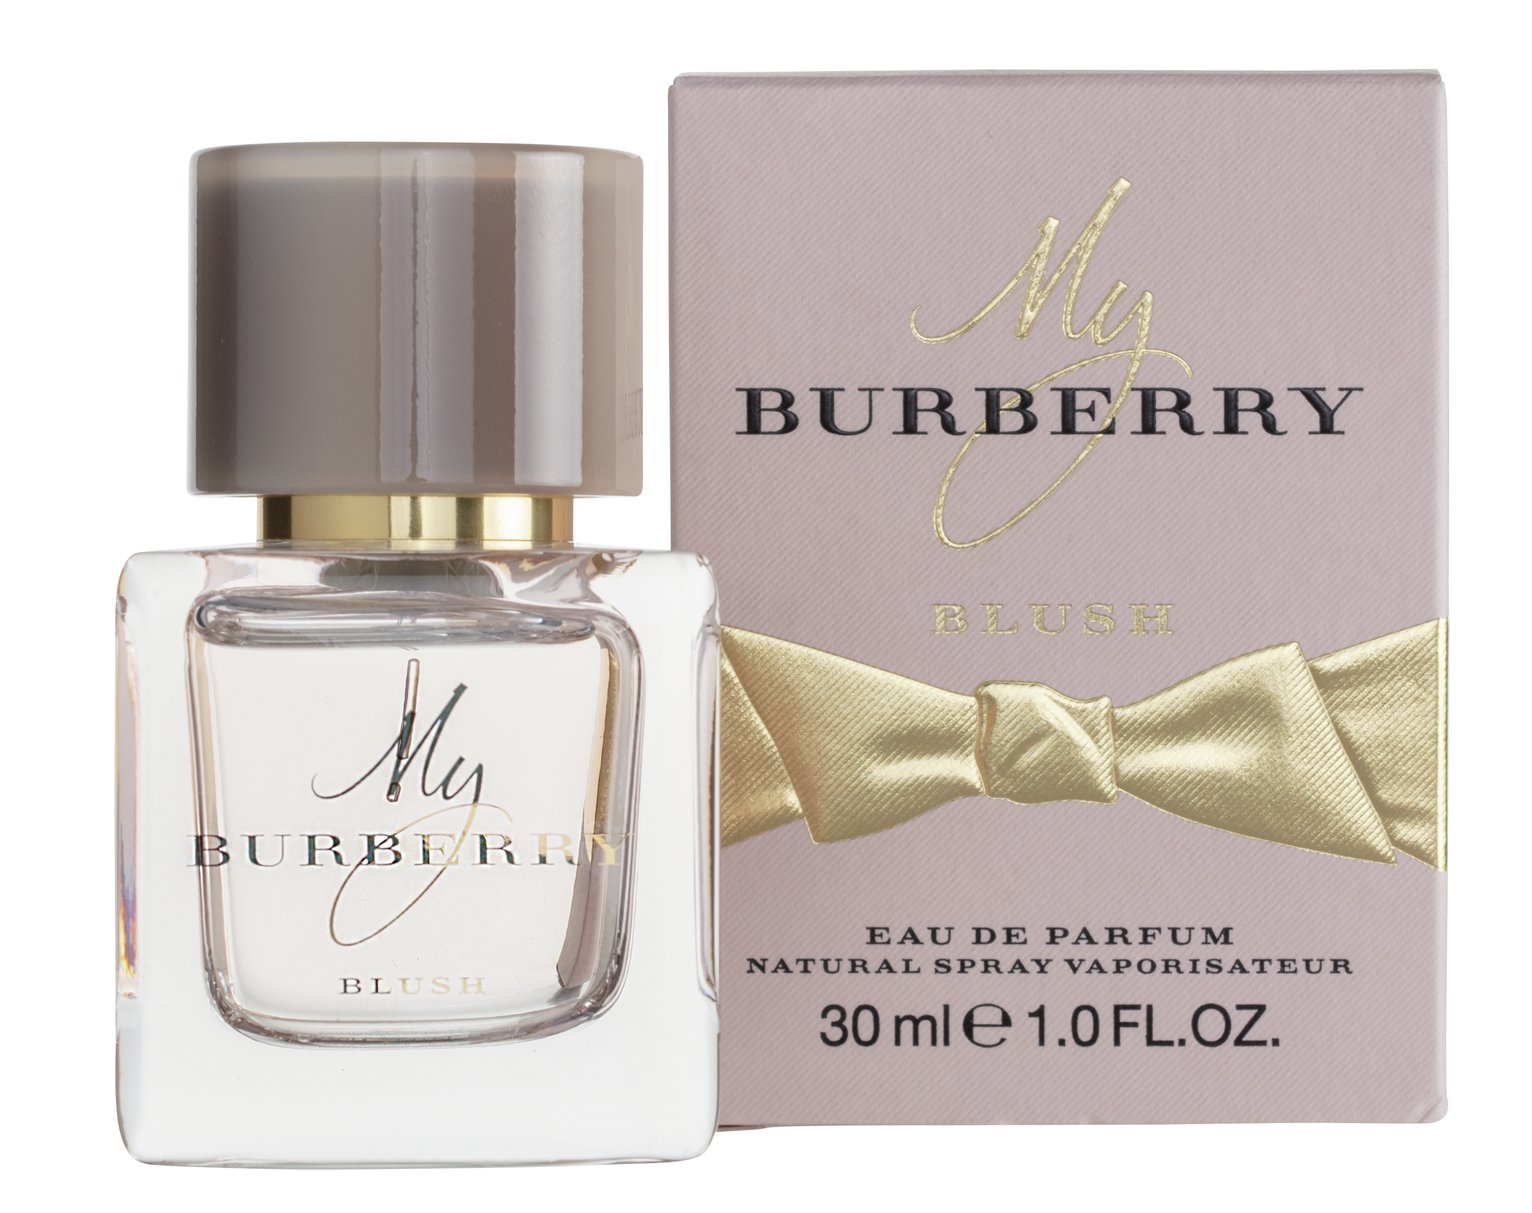 Burberry My Burberry Blush for Women Eau de Parfum review